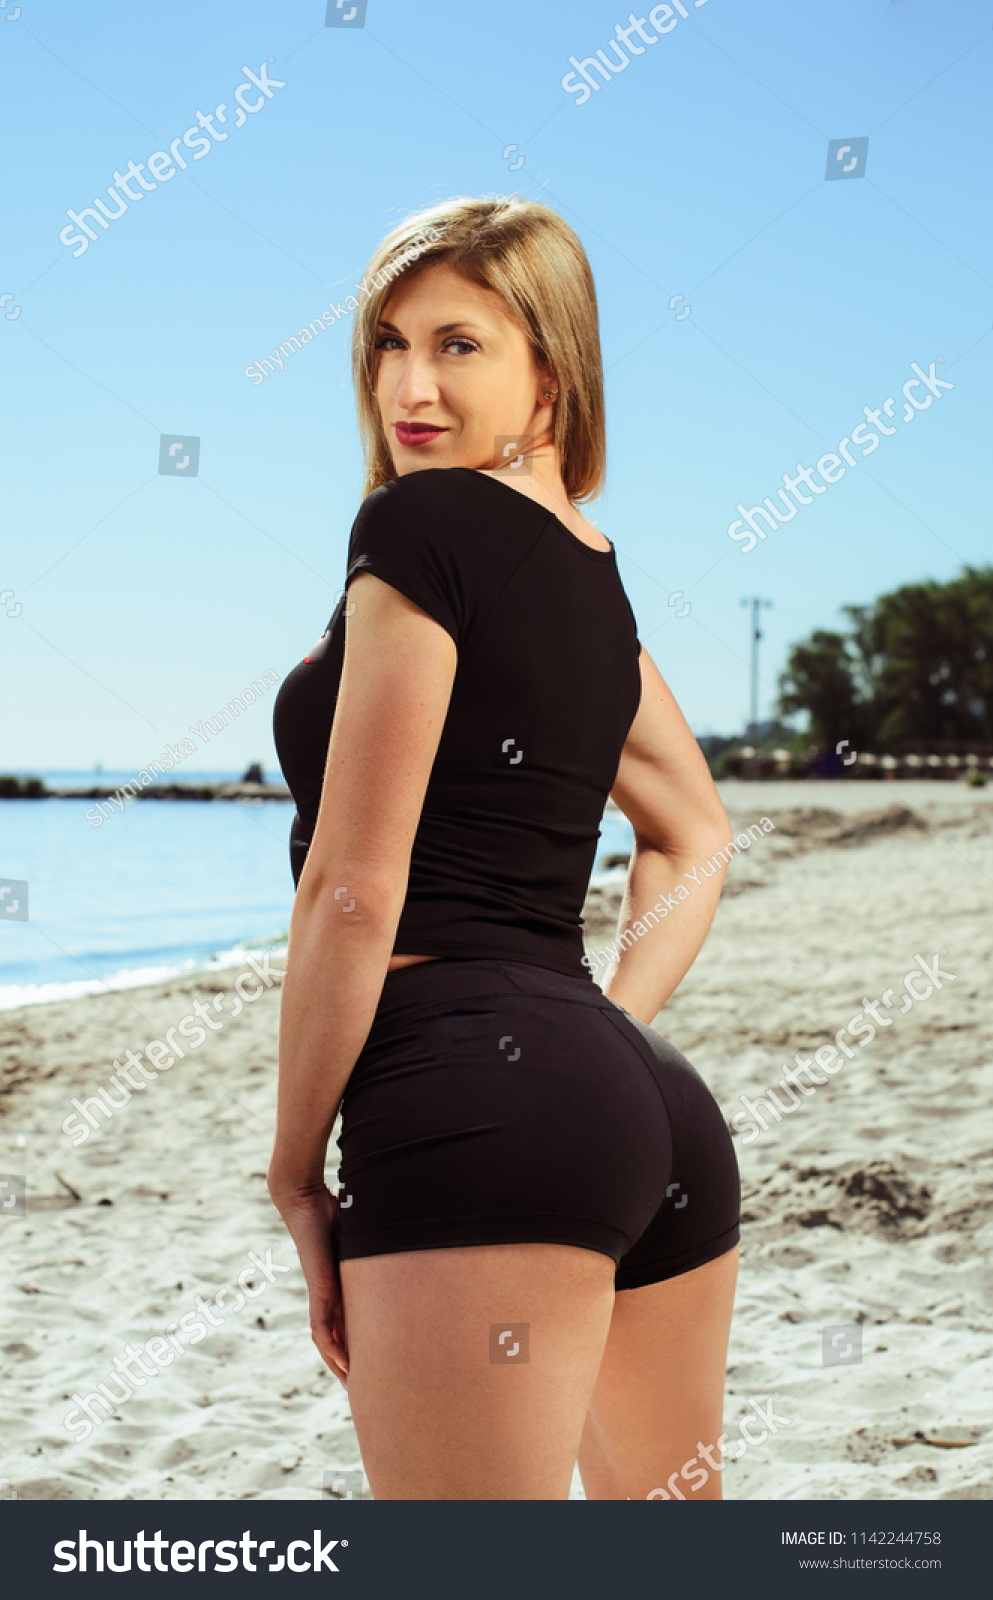 Beautiful girl ass